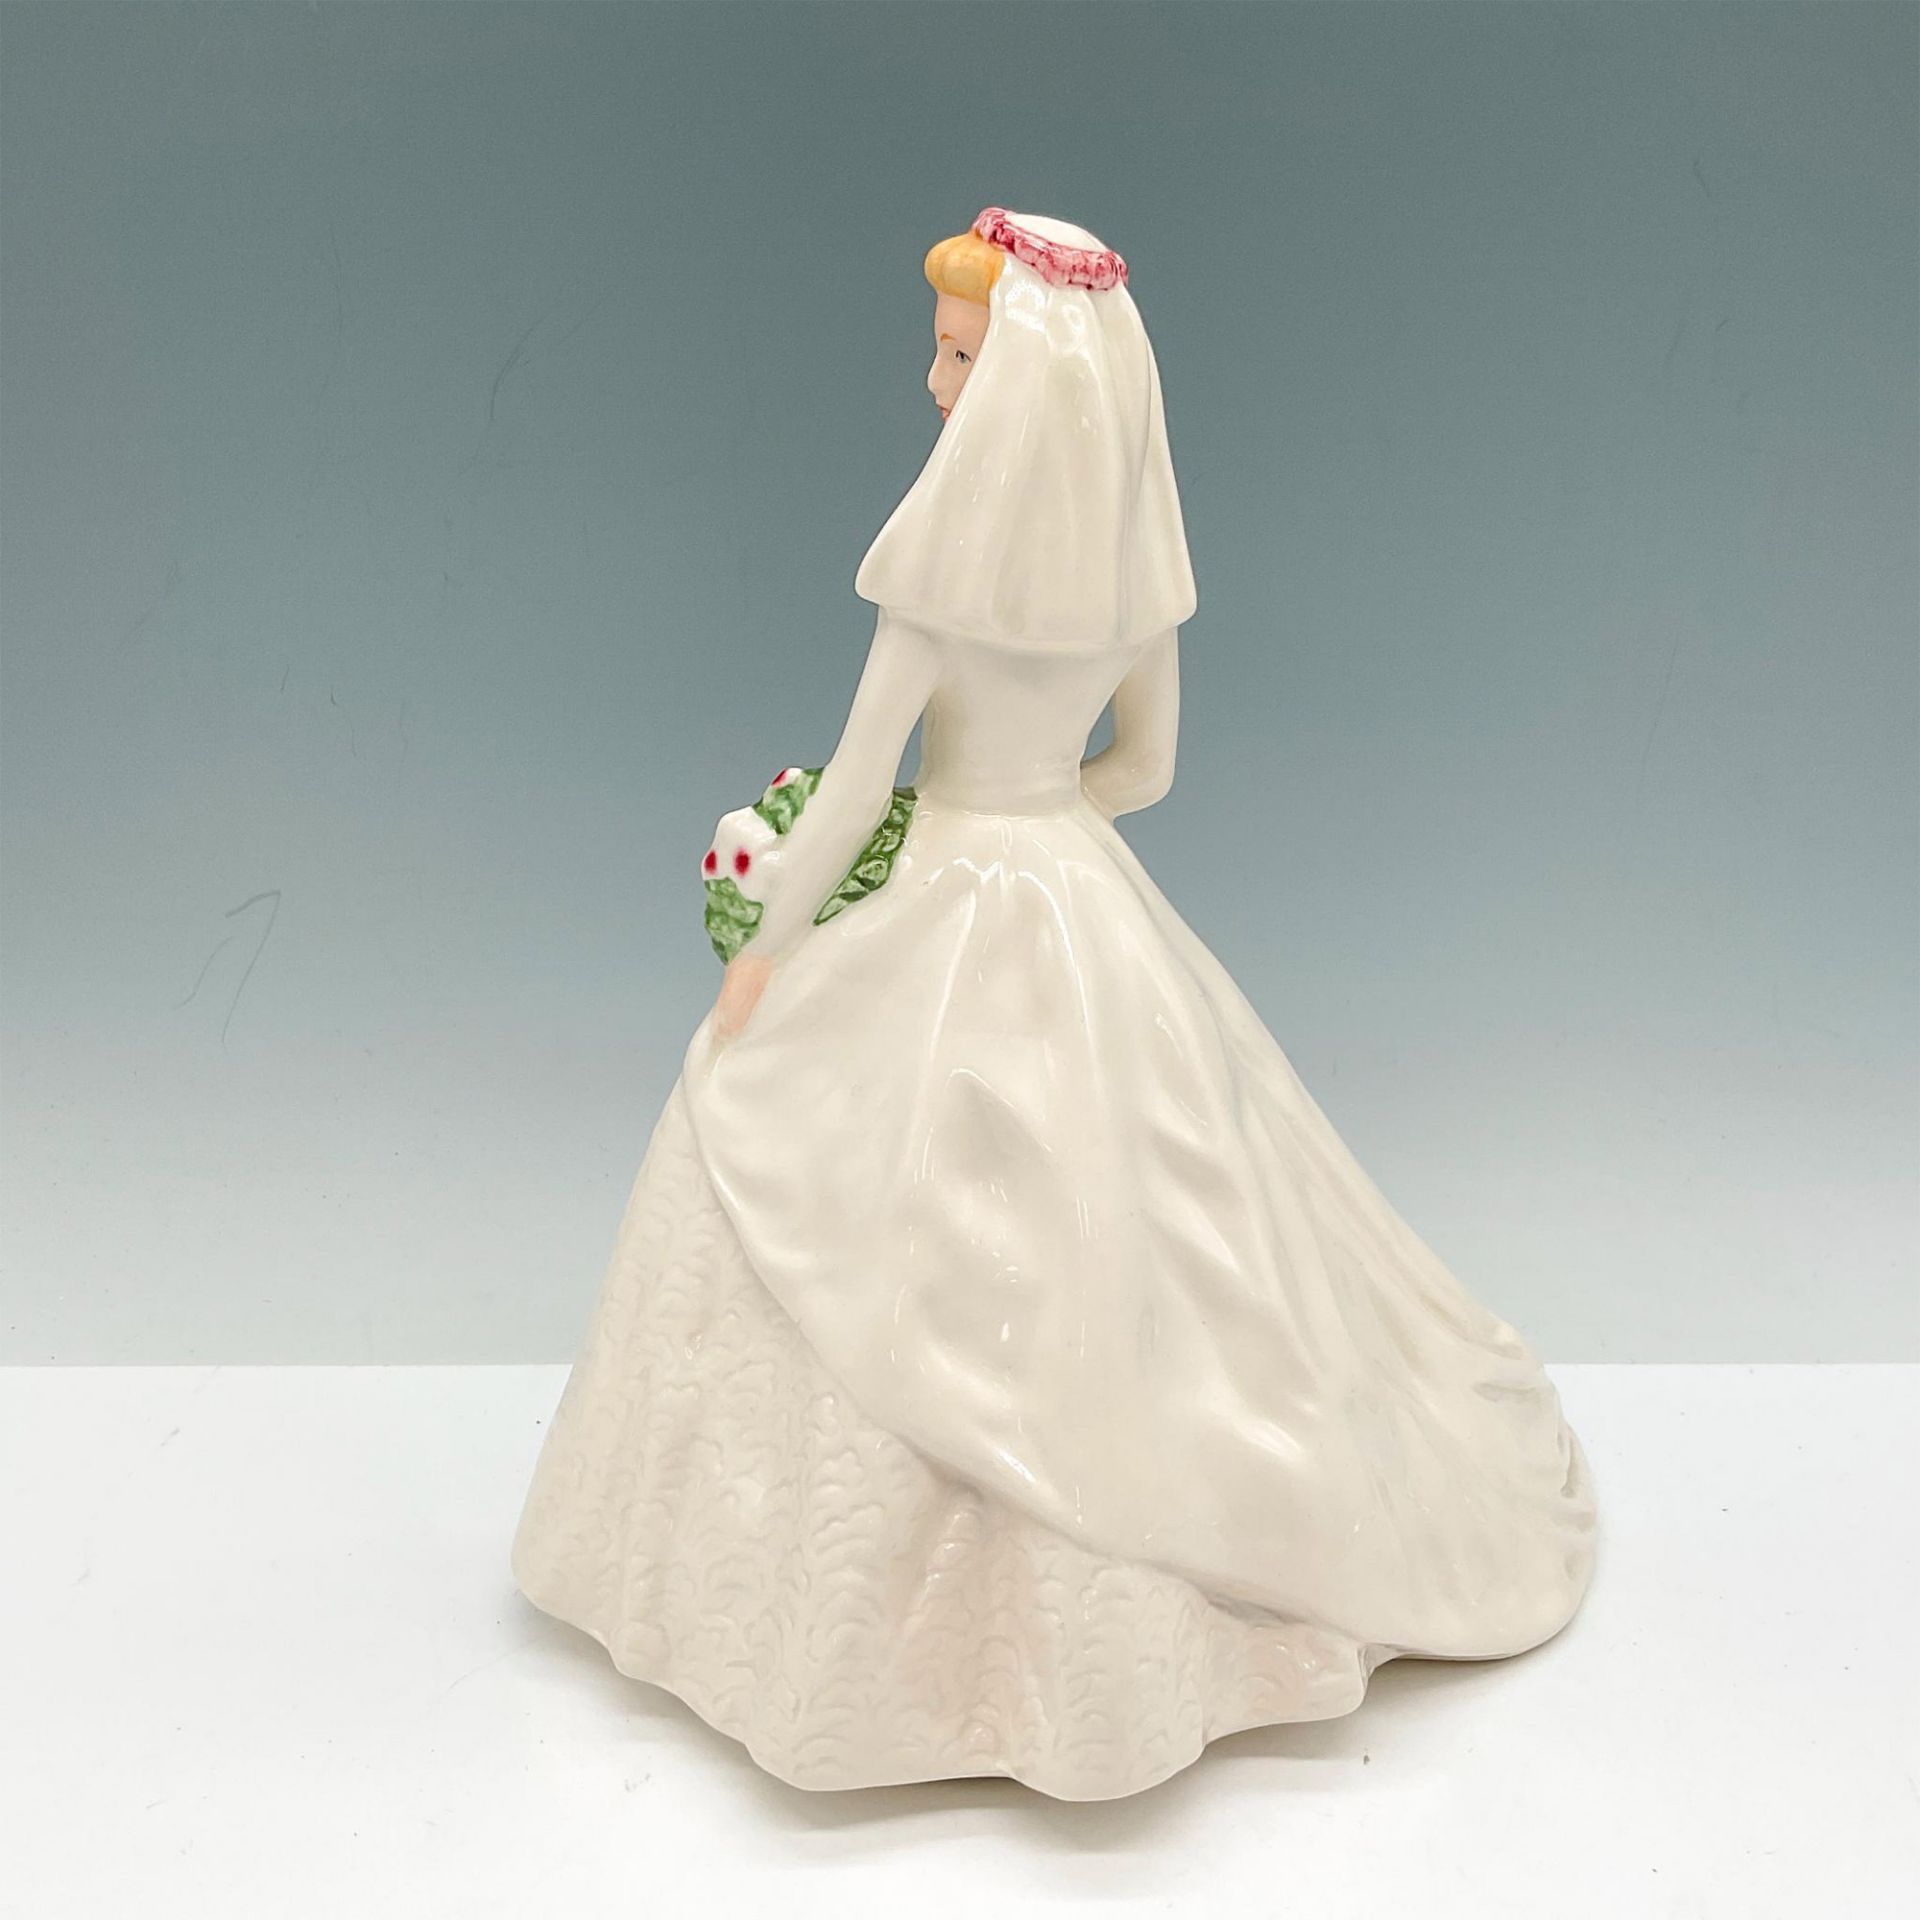 Goebel Porcelain Figurine, Forever and Always - Image 2 of 3